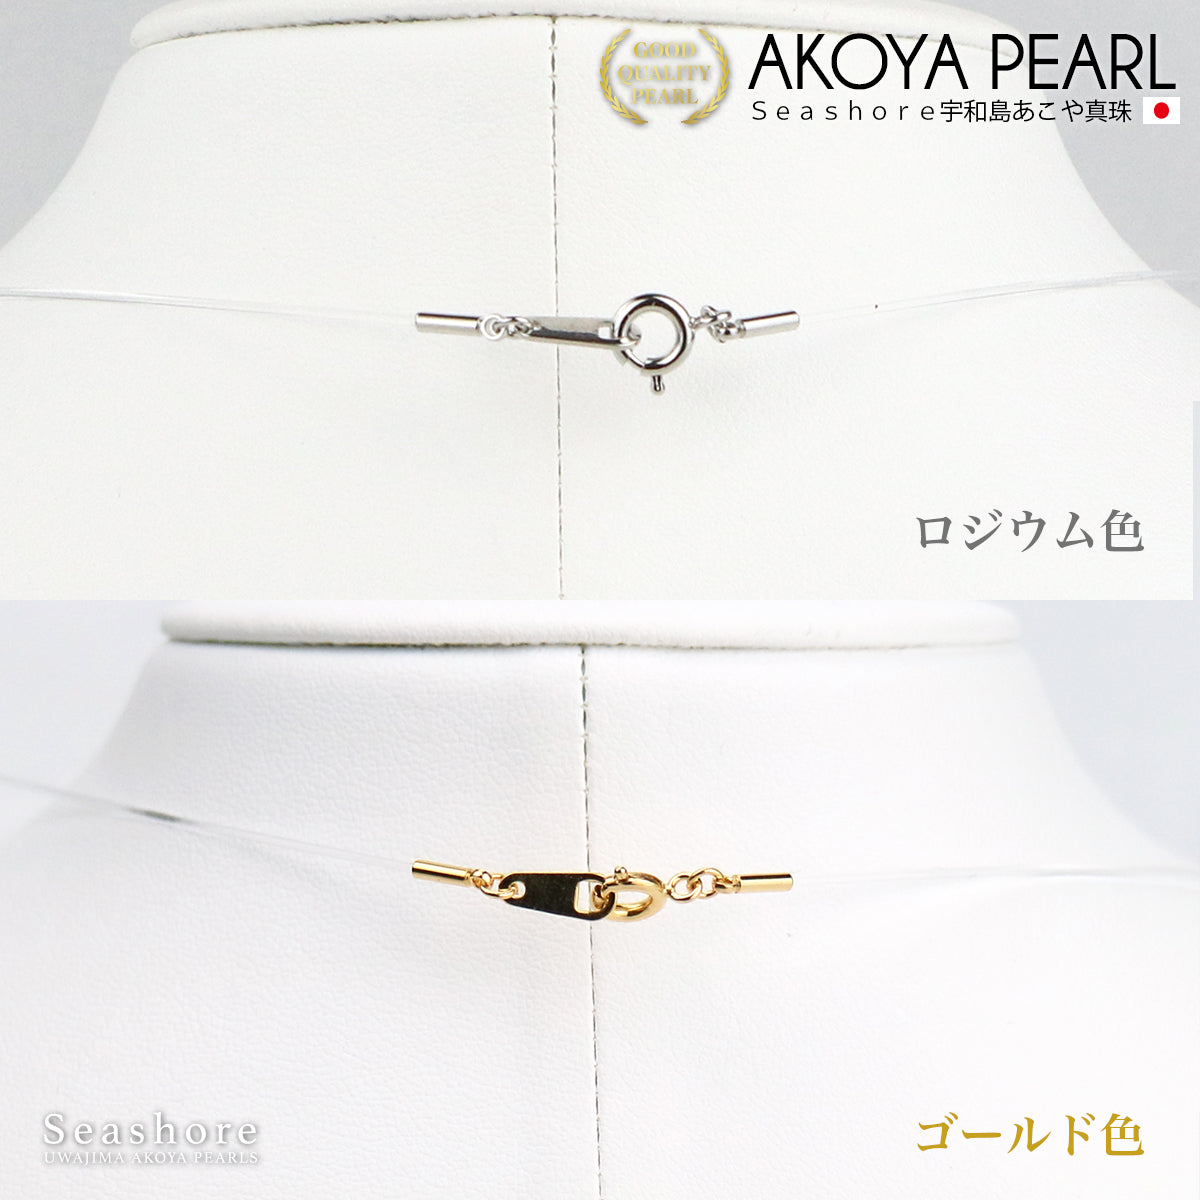 Akoya Pearl Clear Choker Necklace White [8.0-9.0mm] Shape Memory Optical Fiber (4053)